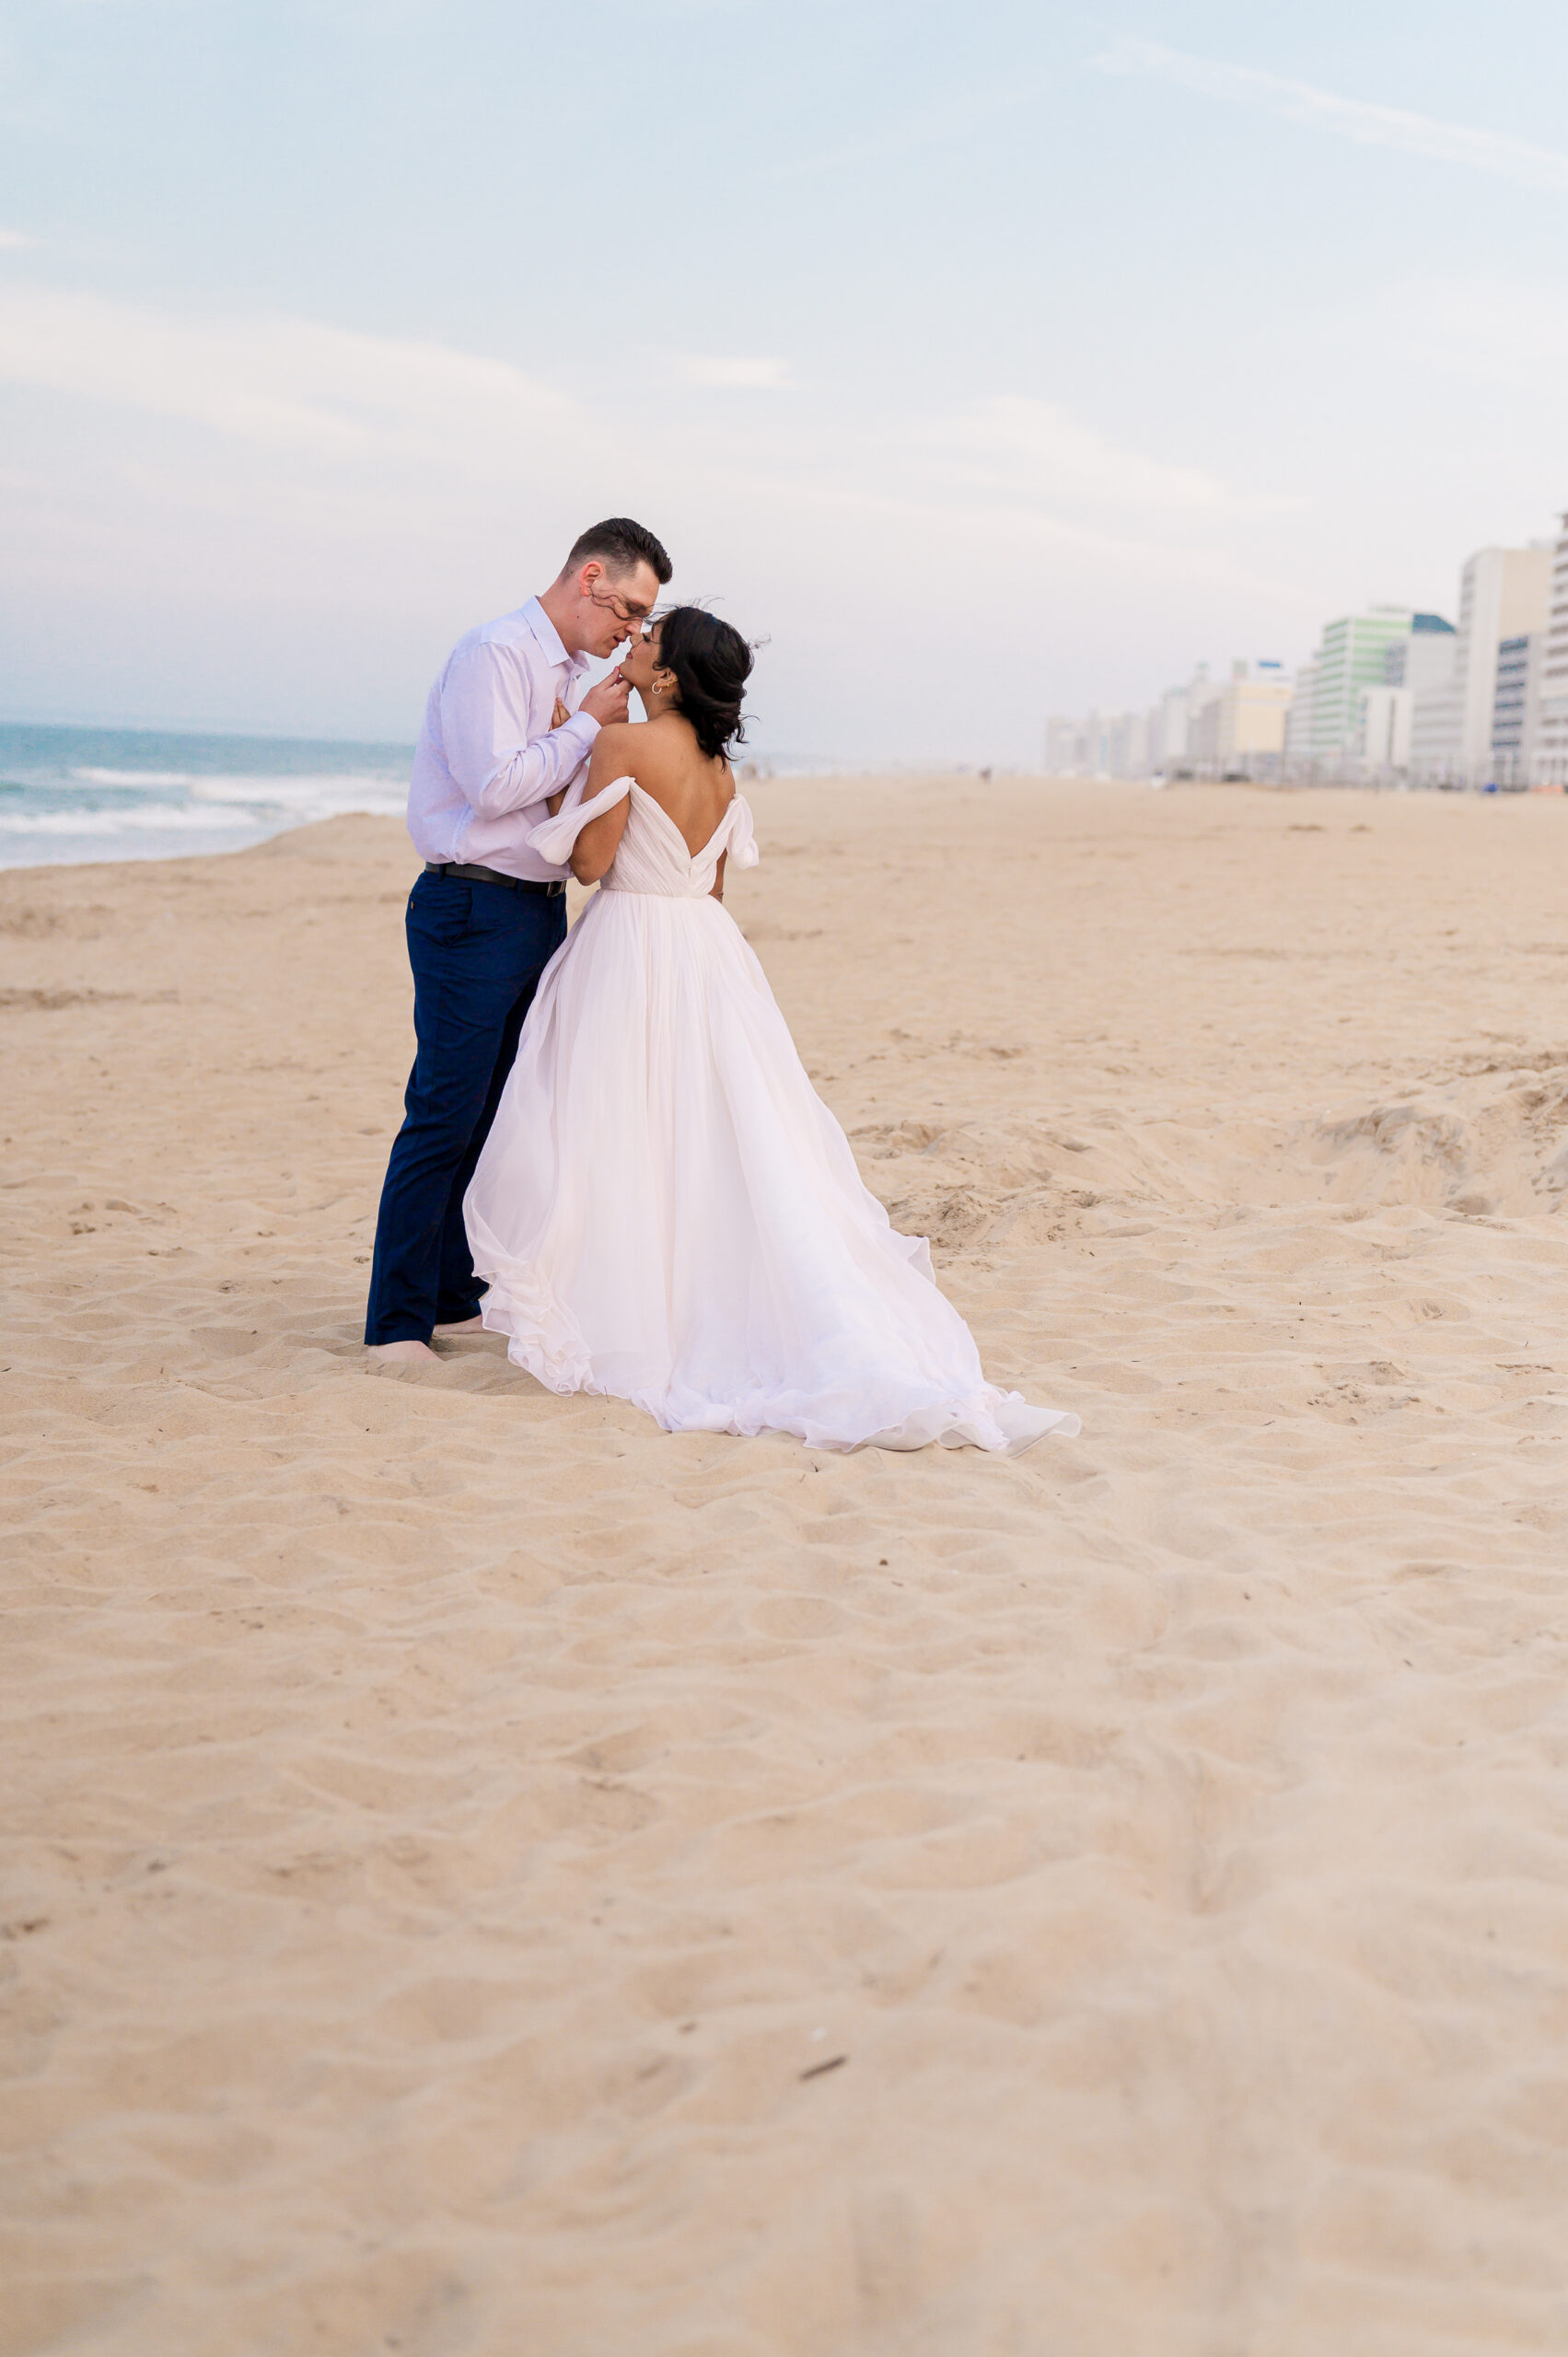 North Carolina beach elopement couple